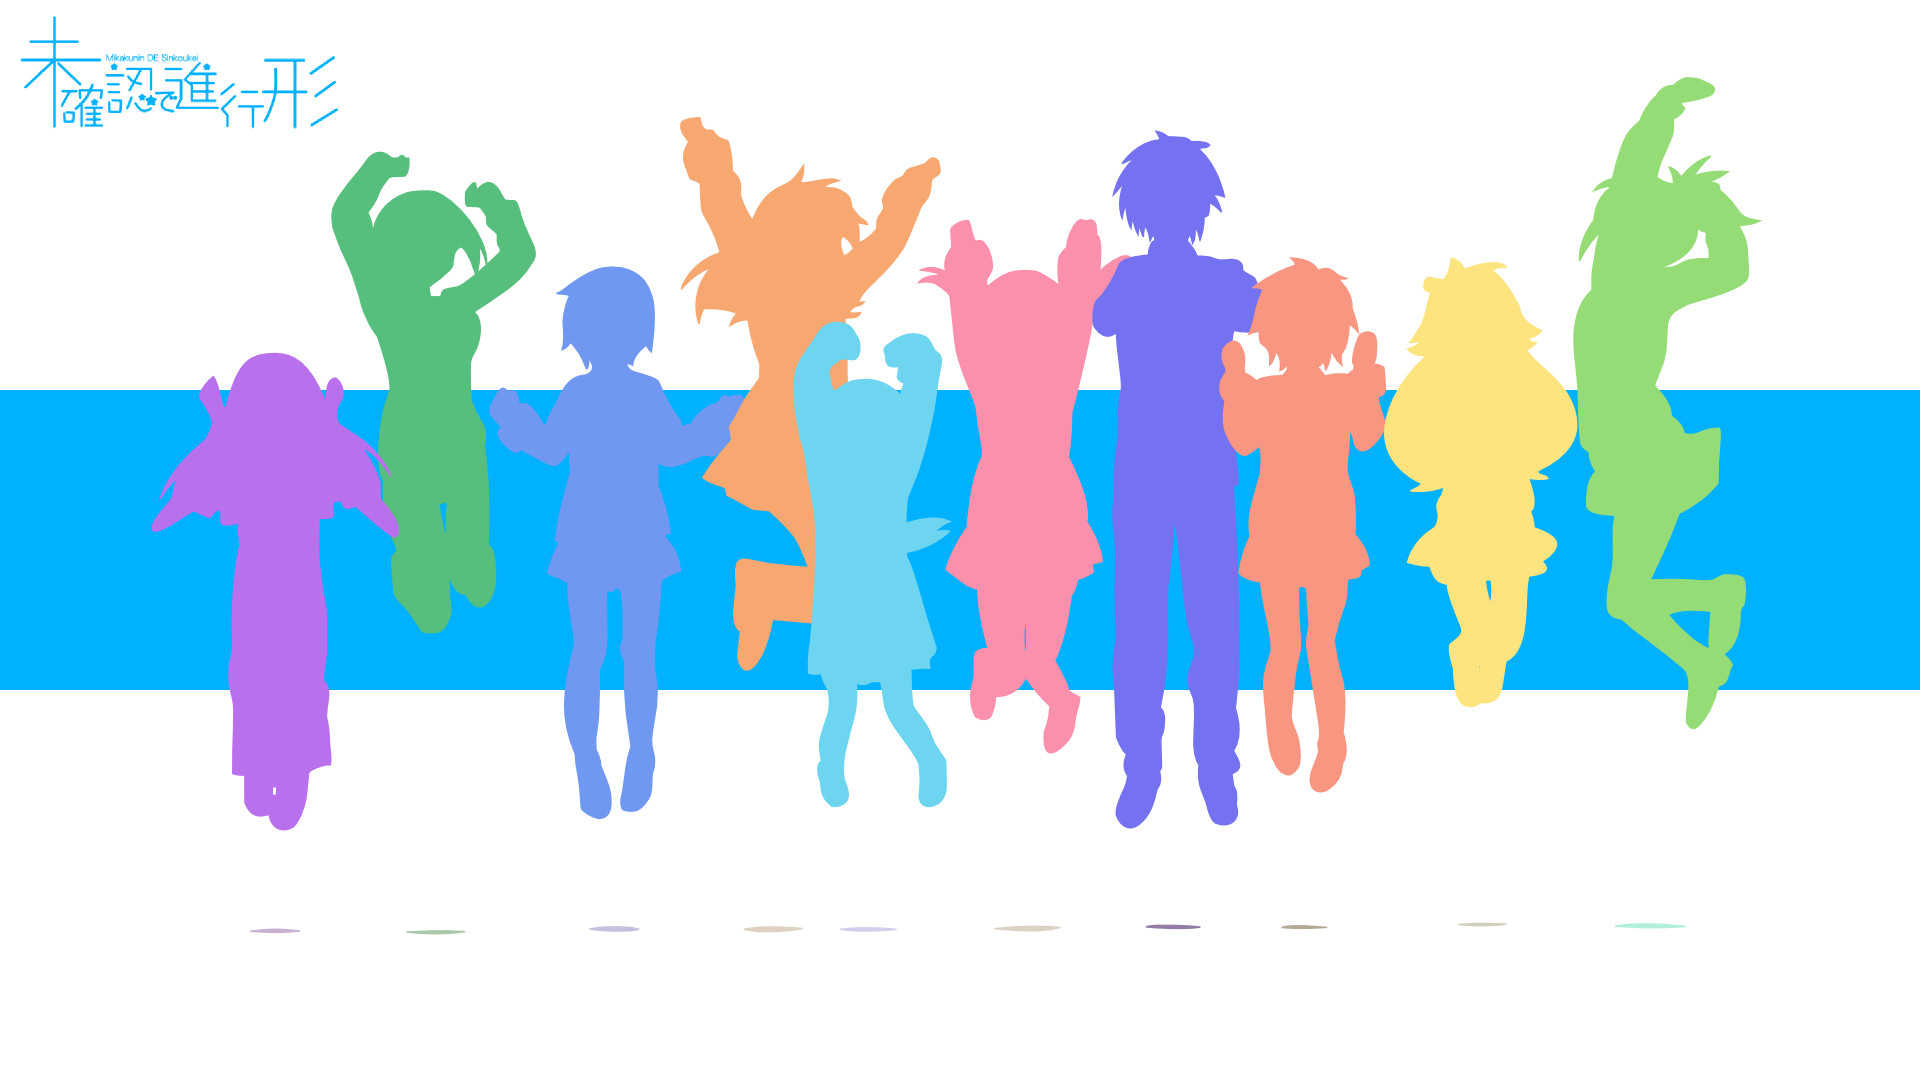 HD wallpaper: Mikakunin de Shinkoukei, Yonomori Kobeni, anime girls, one  person